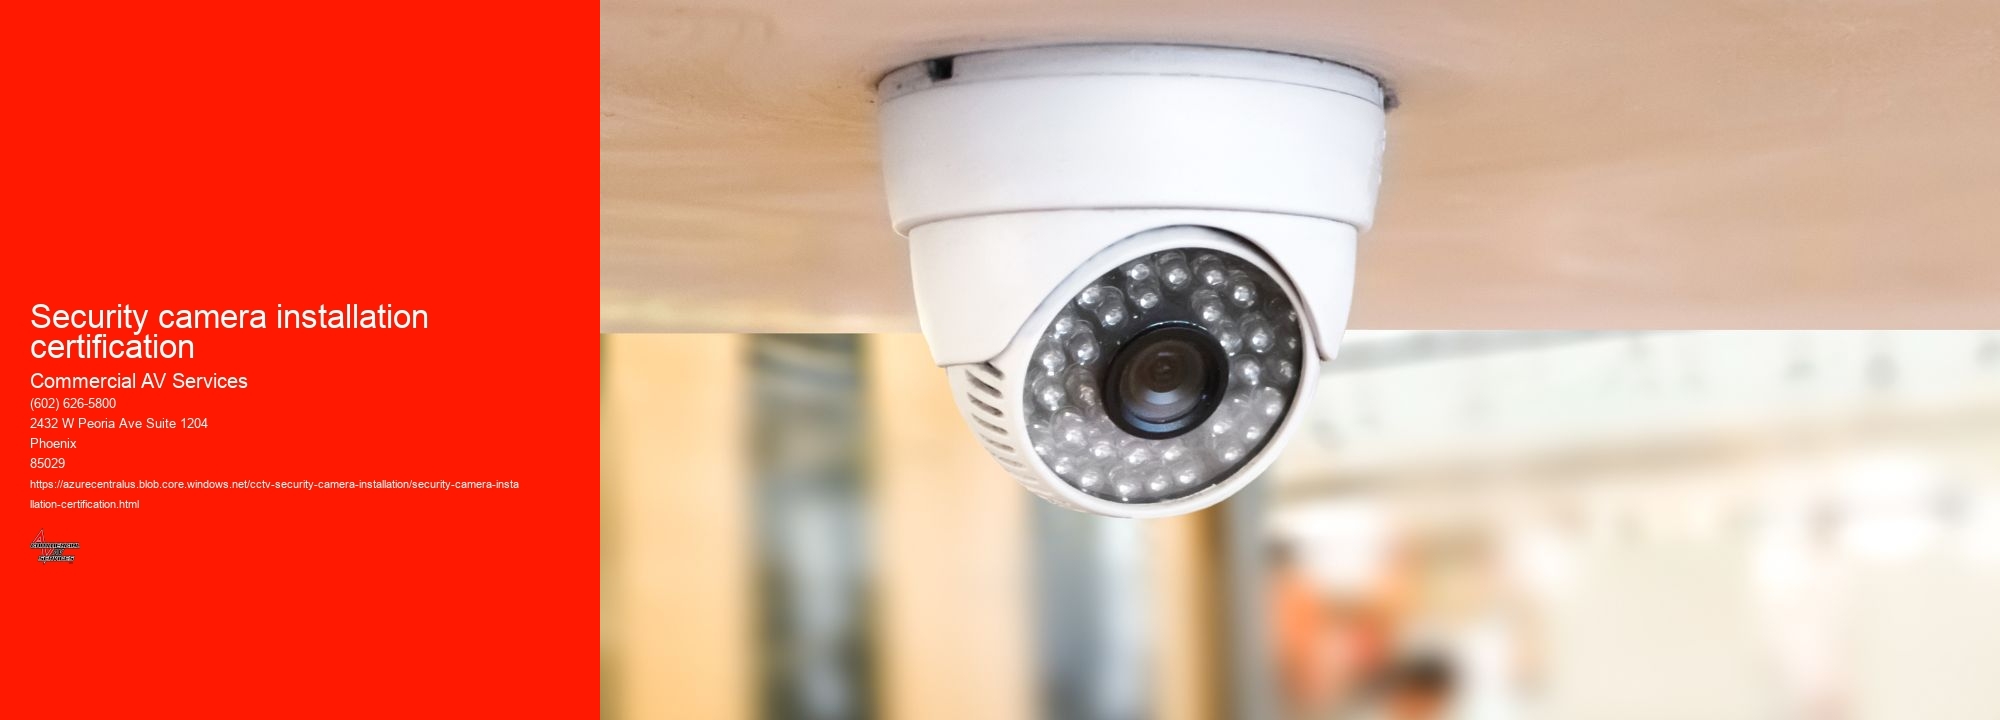 Security camera installation certification